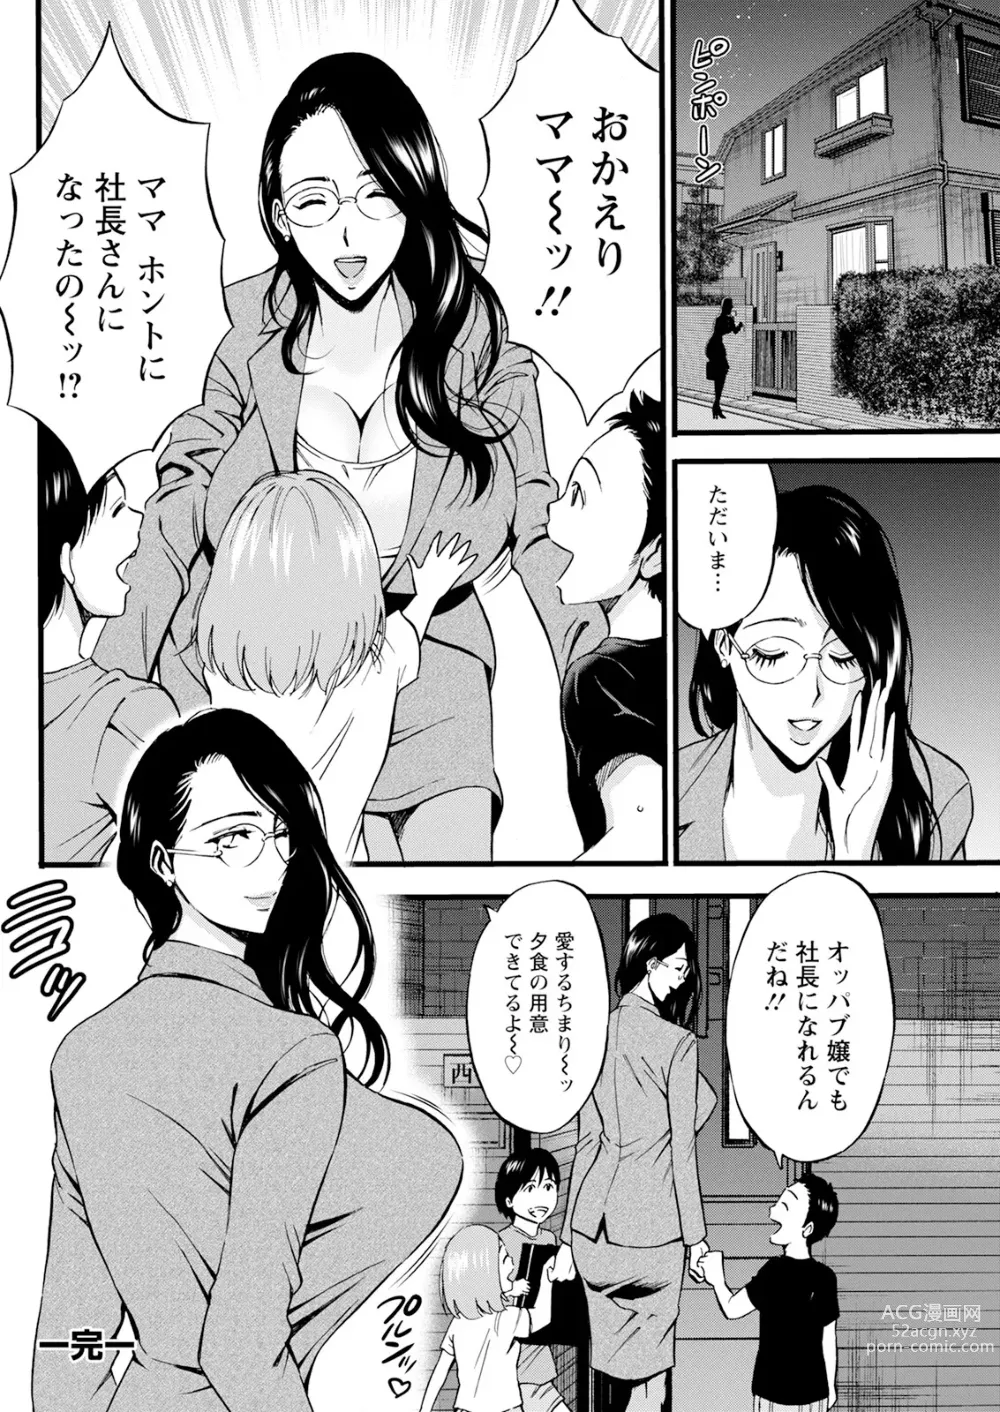 Page 189 of manga Compliance Yuruyuru Chimarisan 1-9